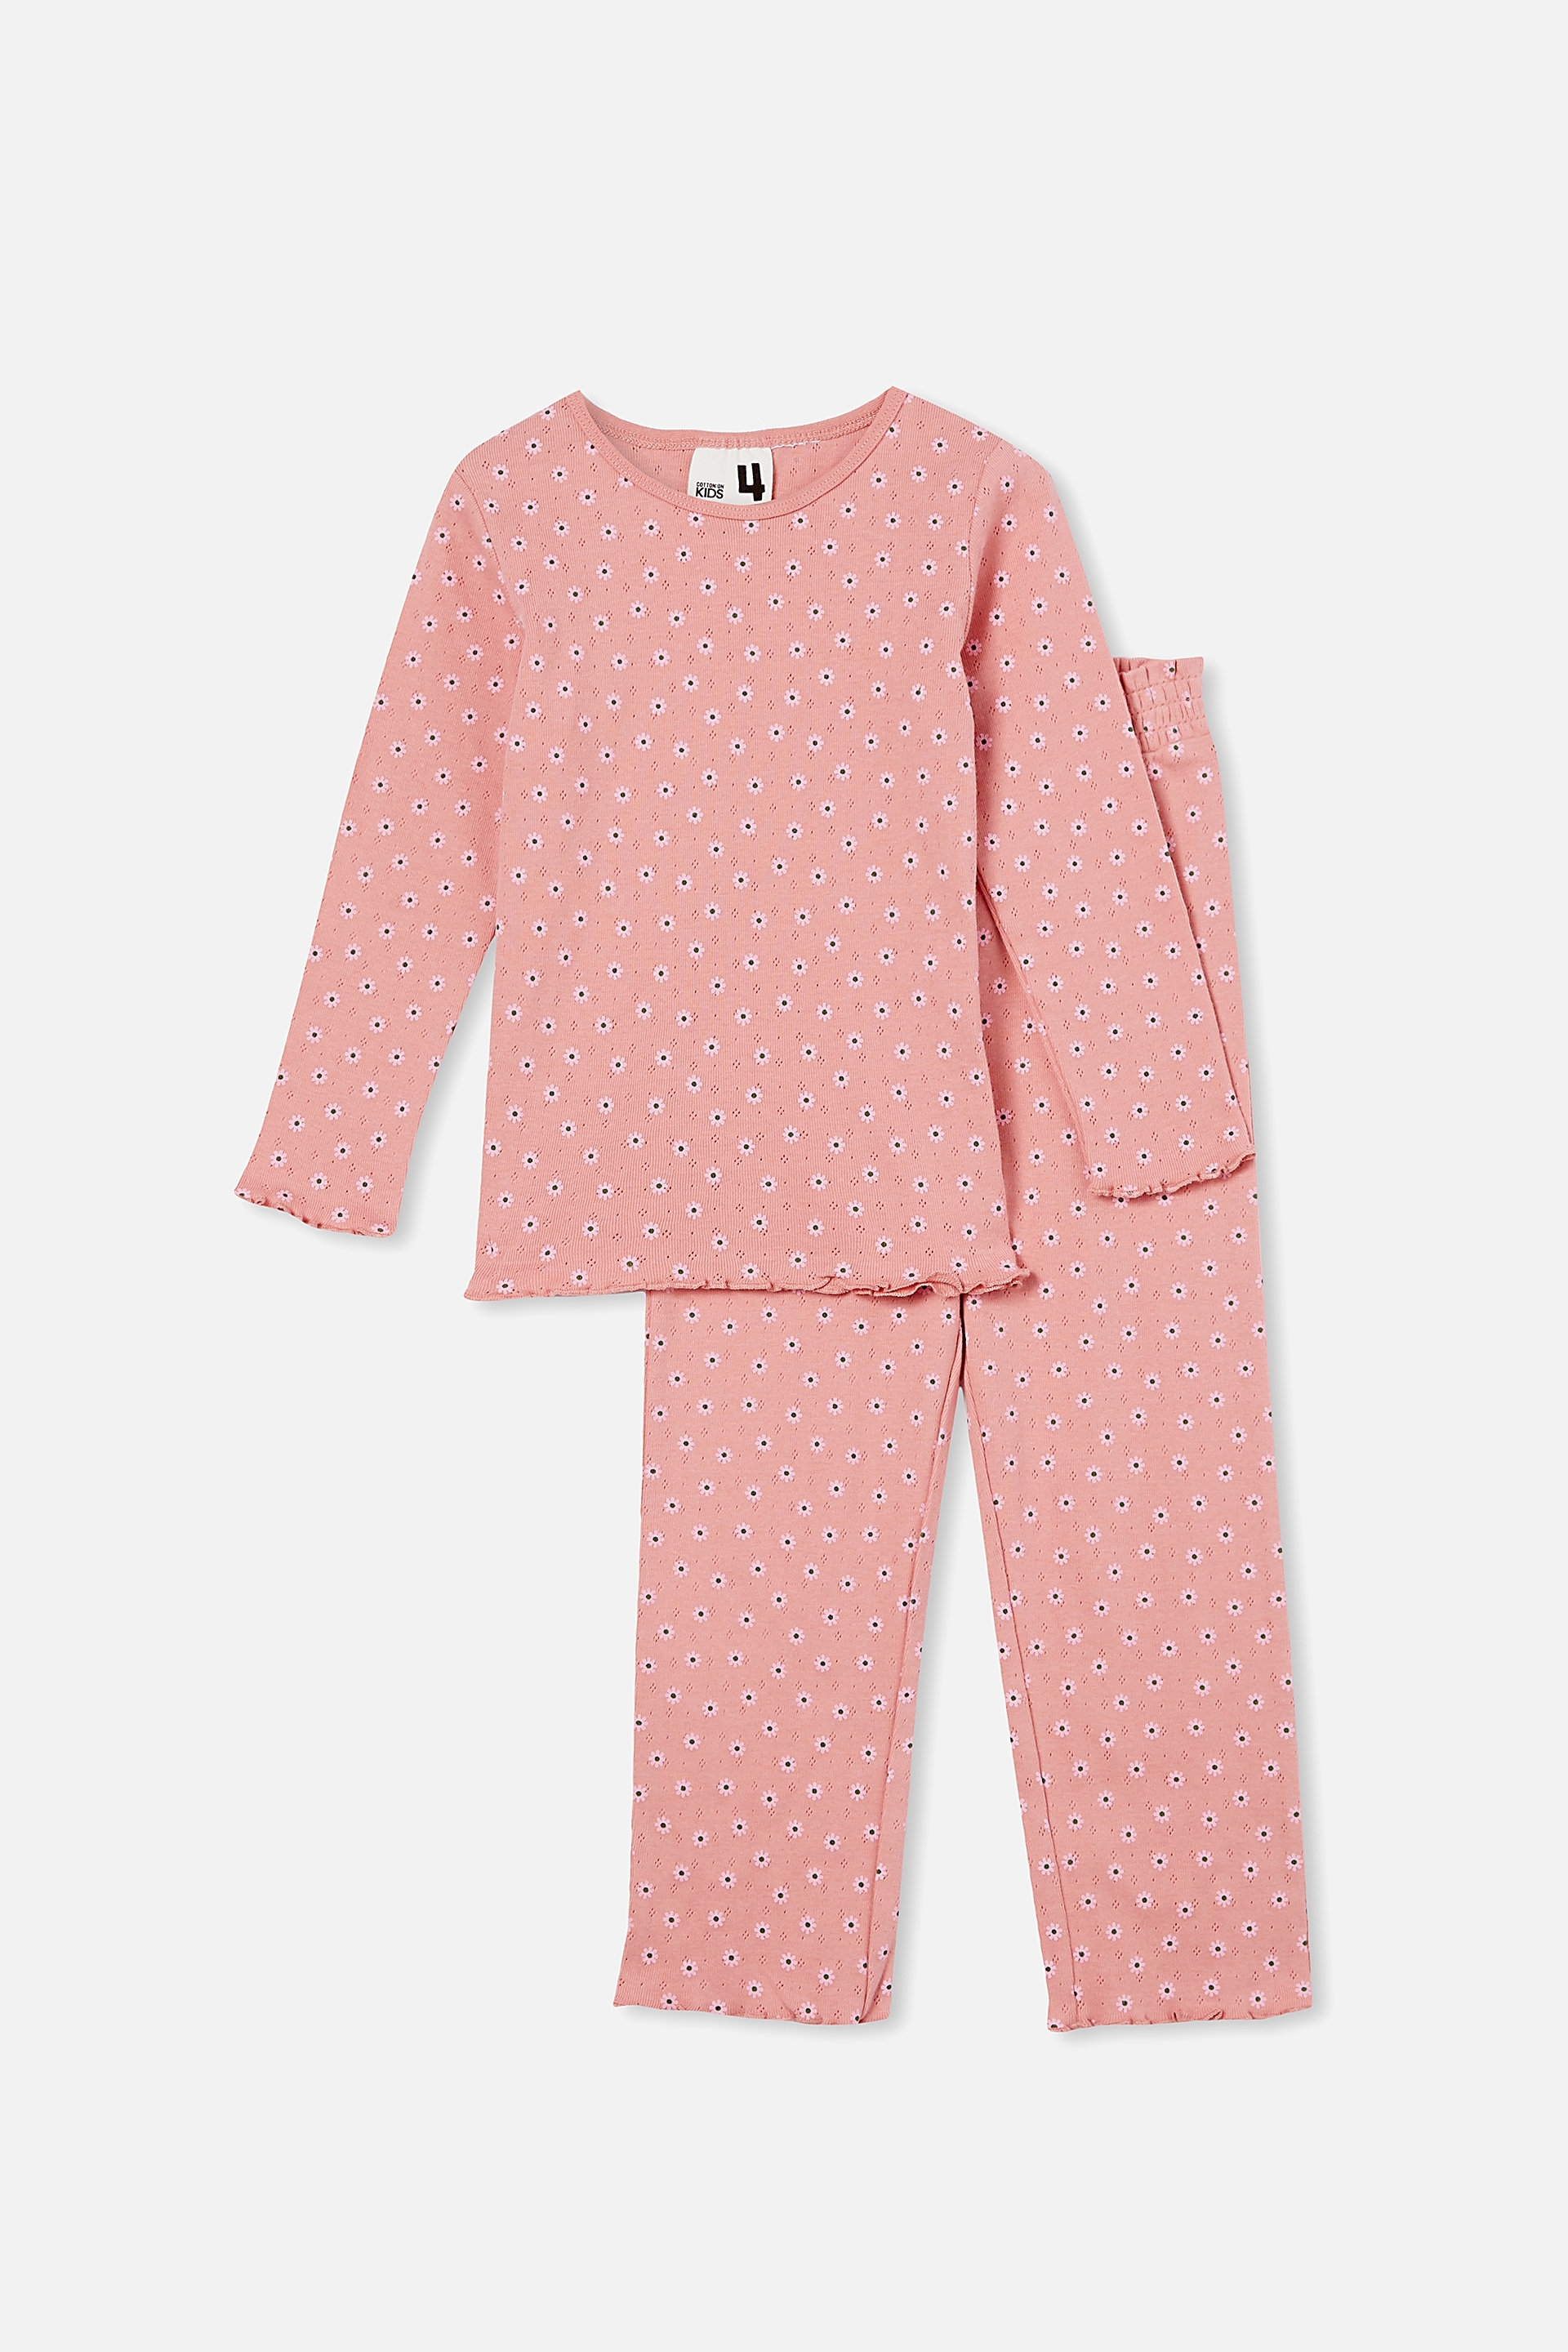 Cotton On Kids - Camilla Long Sleeve Pyjama Set - Musk rose/bruny daisy